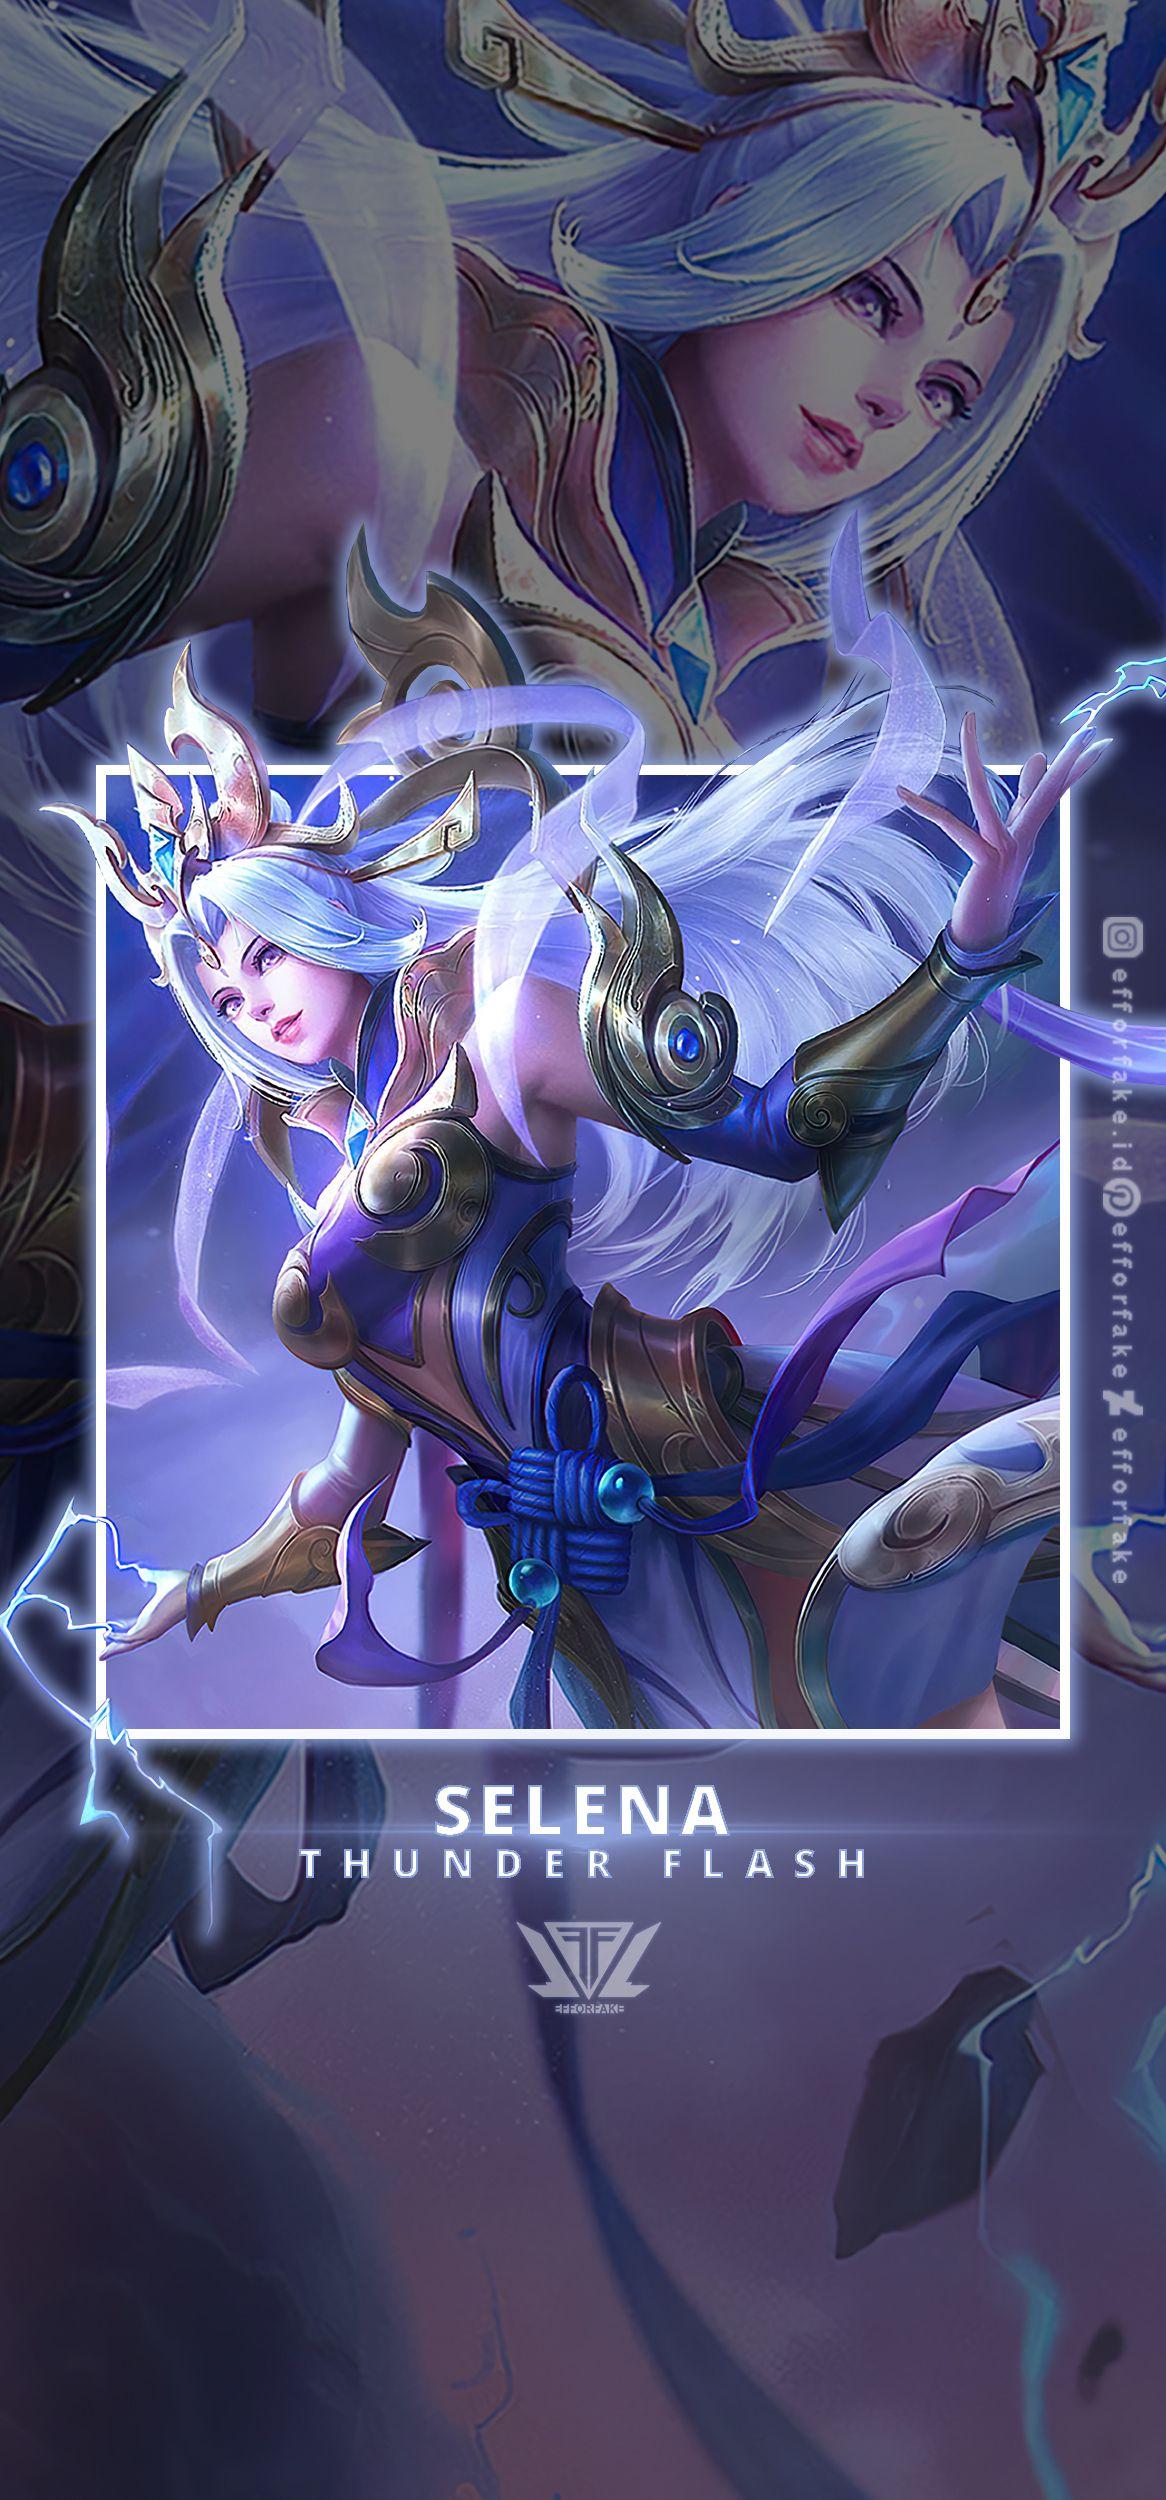 Selena Mobile Legends 4K Ultra HD Mobile Wallpaper